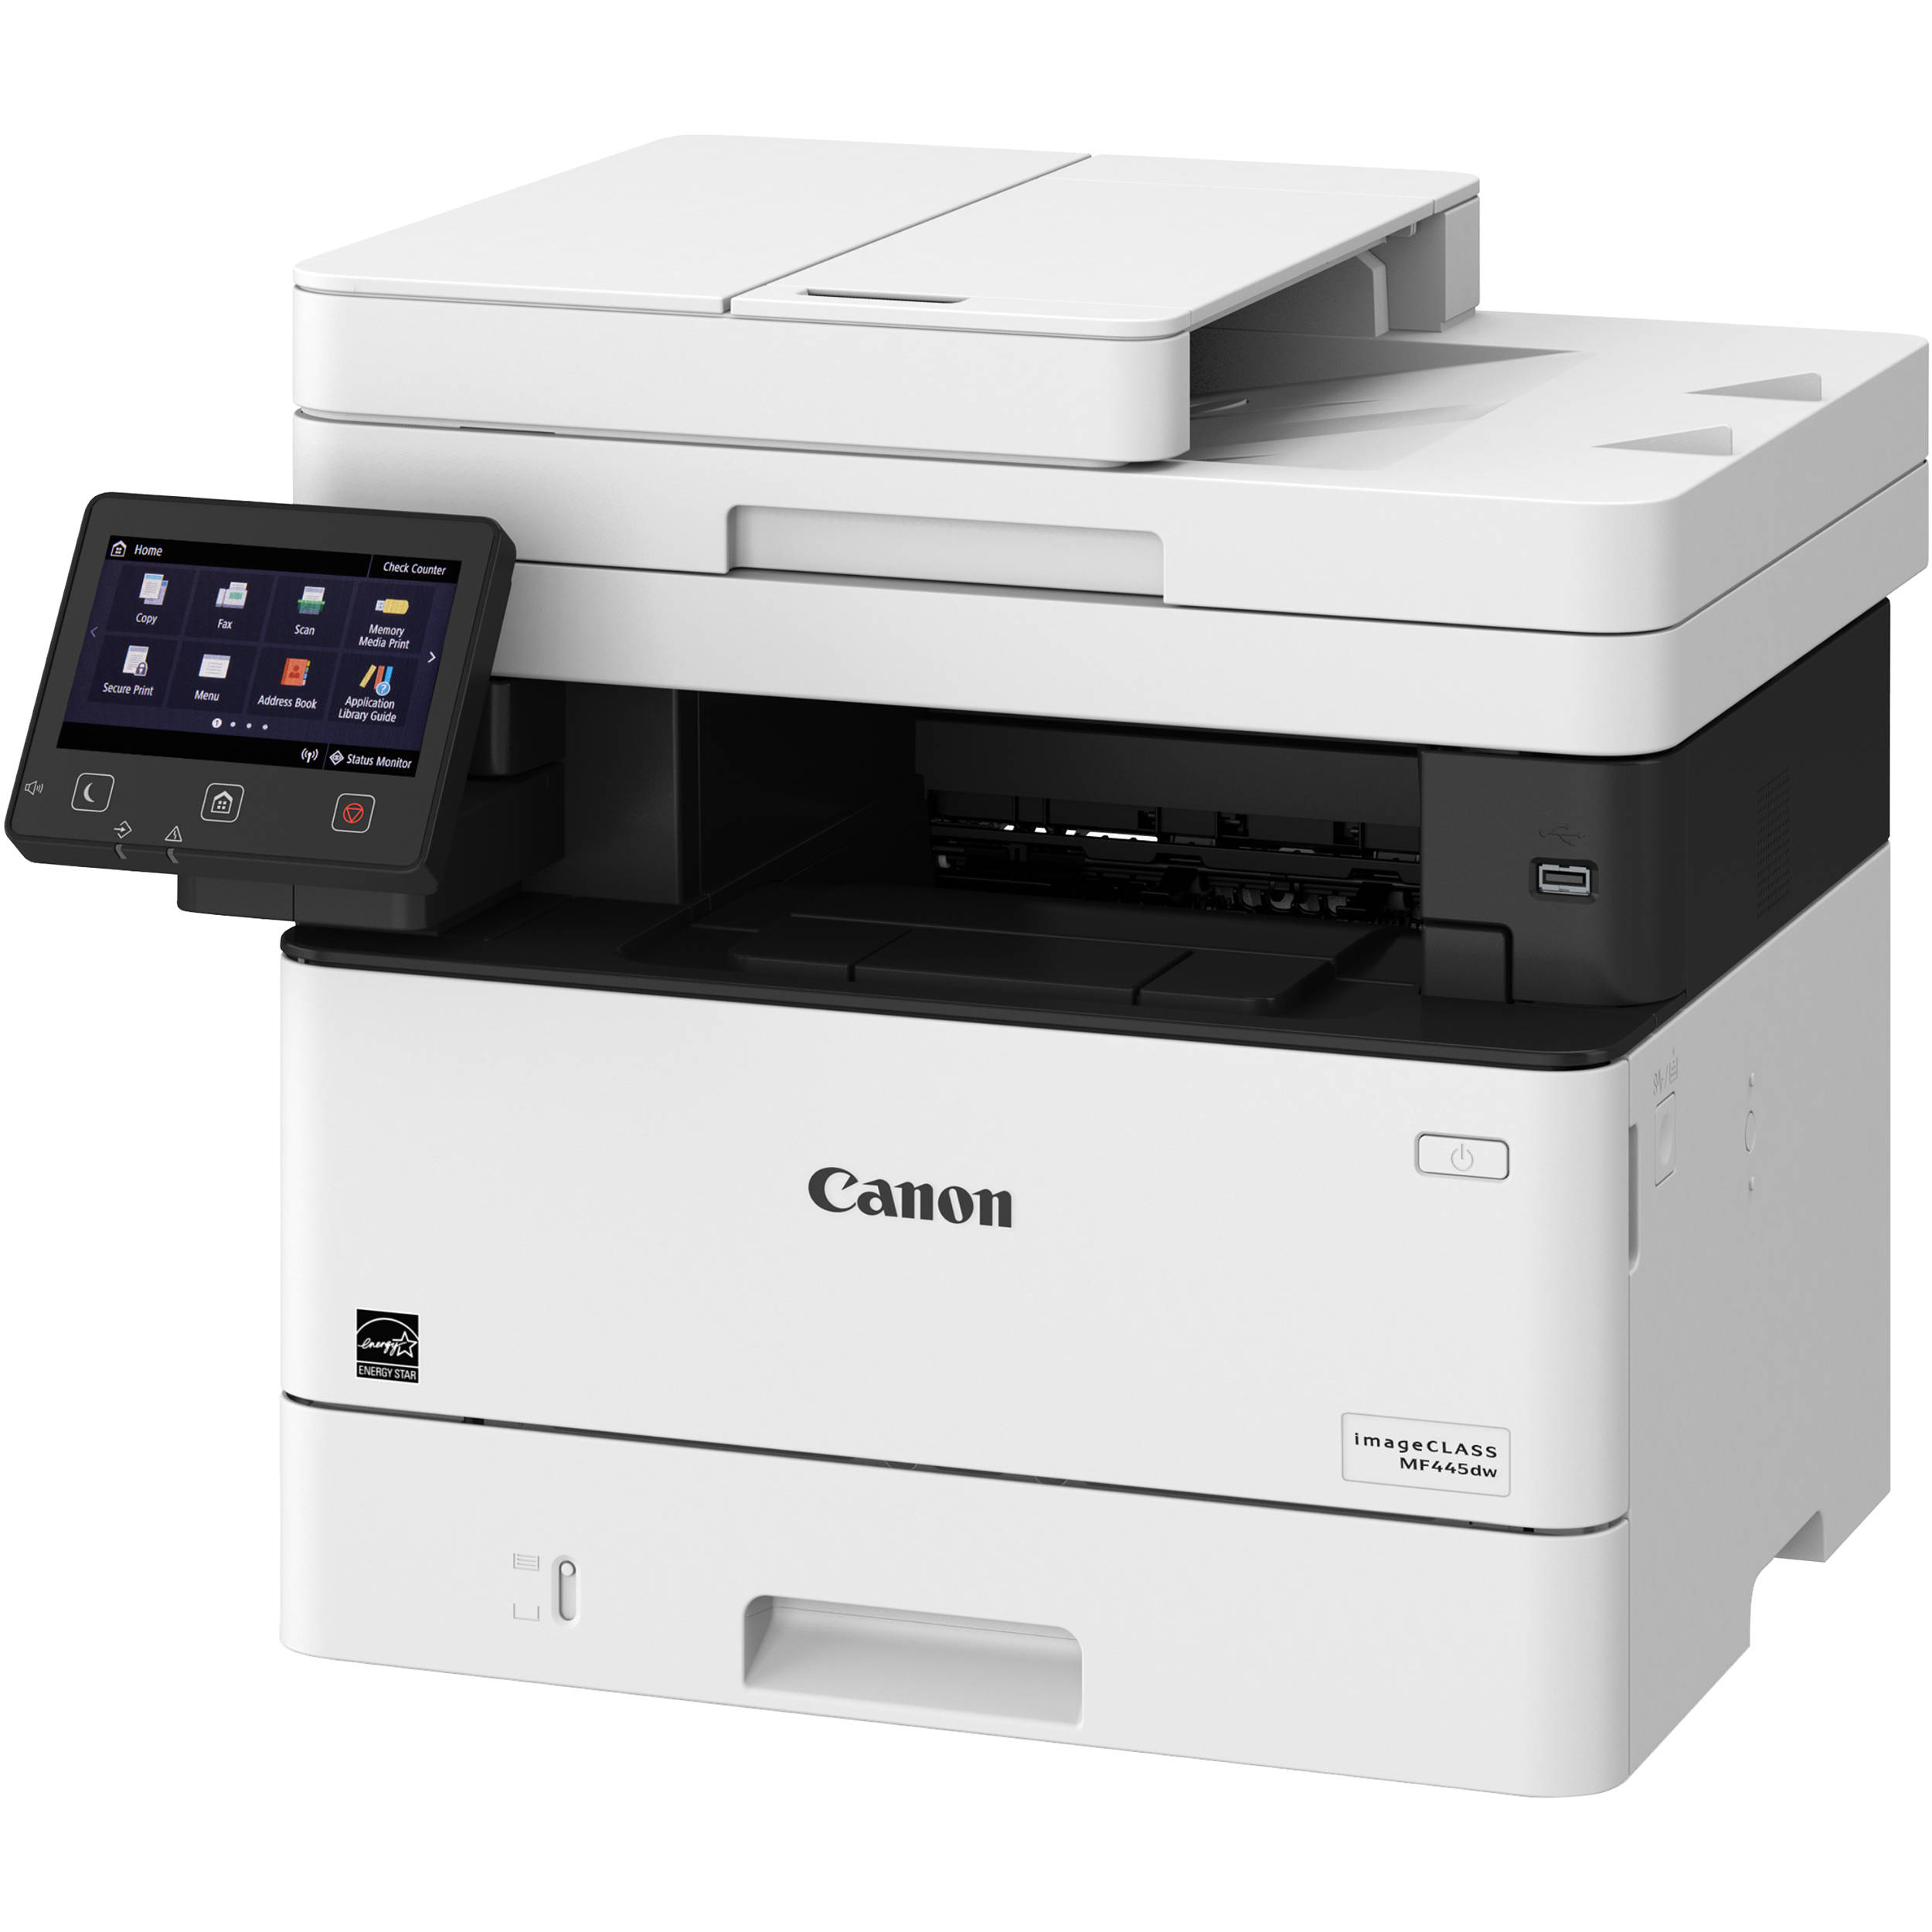 Price Of Canon Laser Printer Online, 53% OFF | www.emanagreen.com